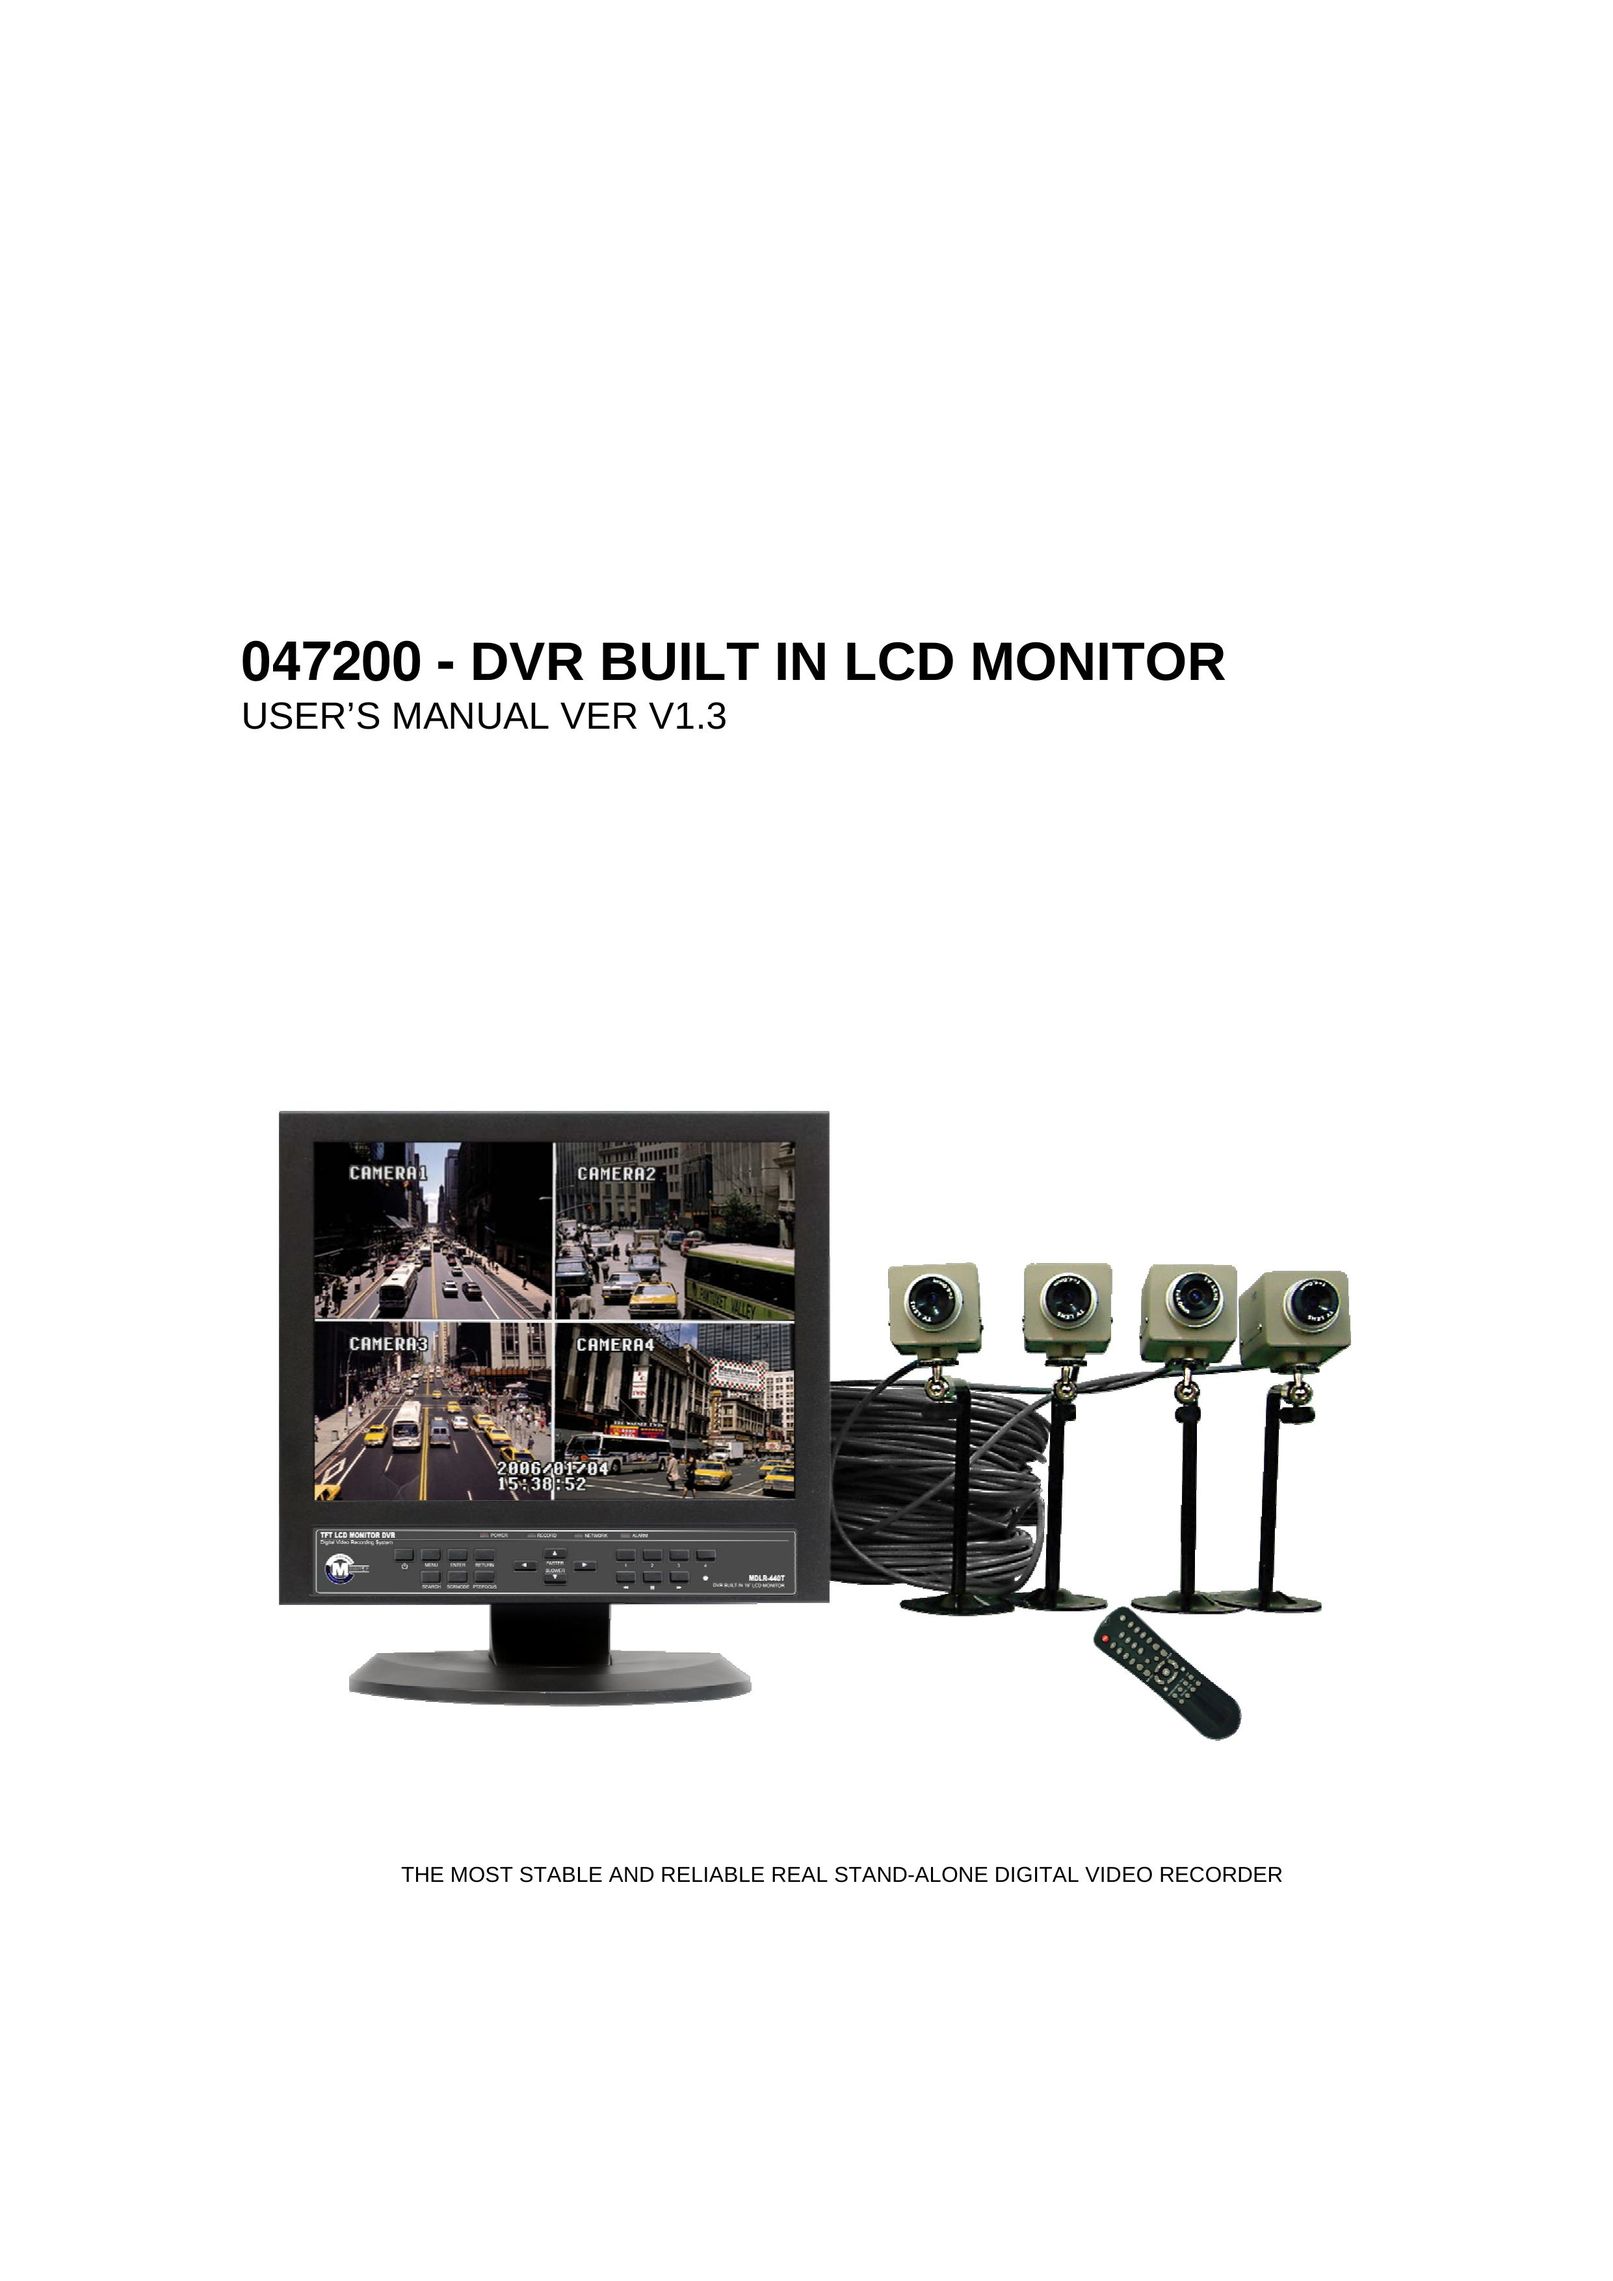 deXlan 047200 DVR User Manual